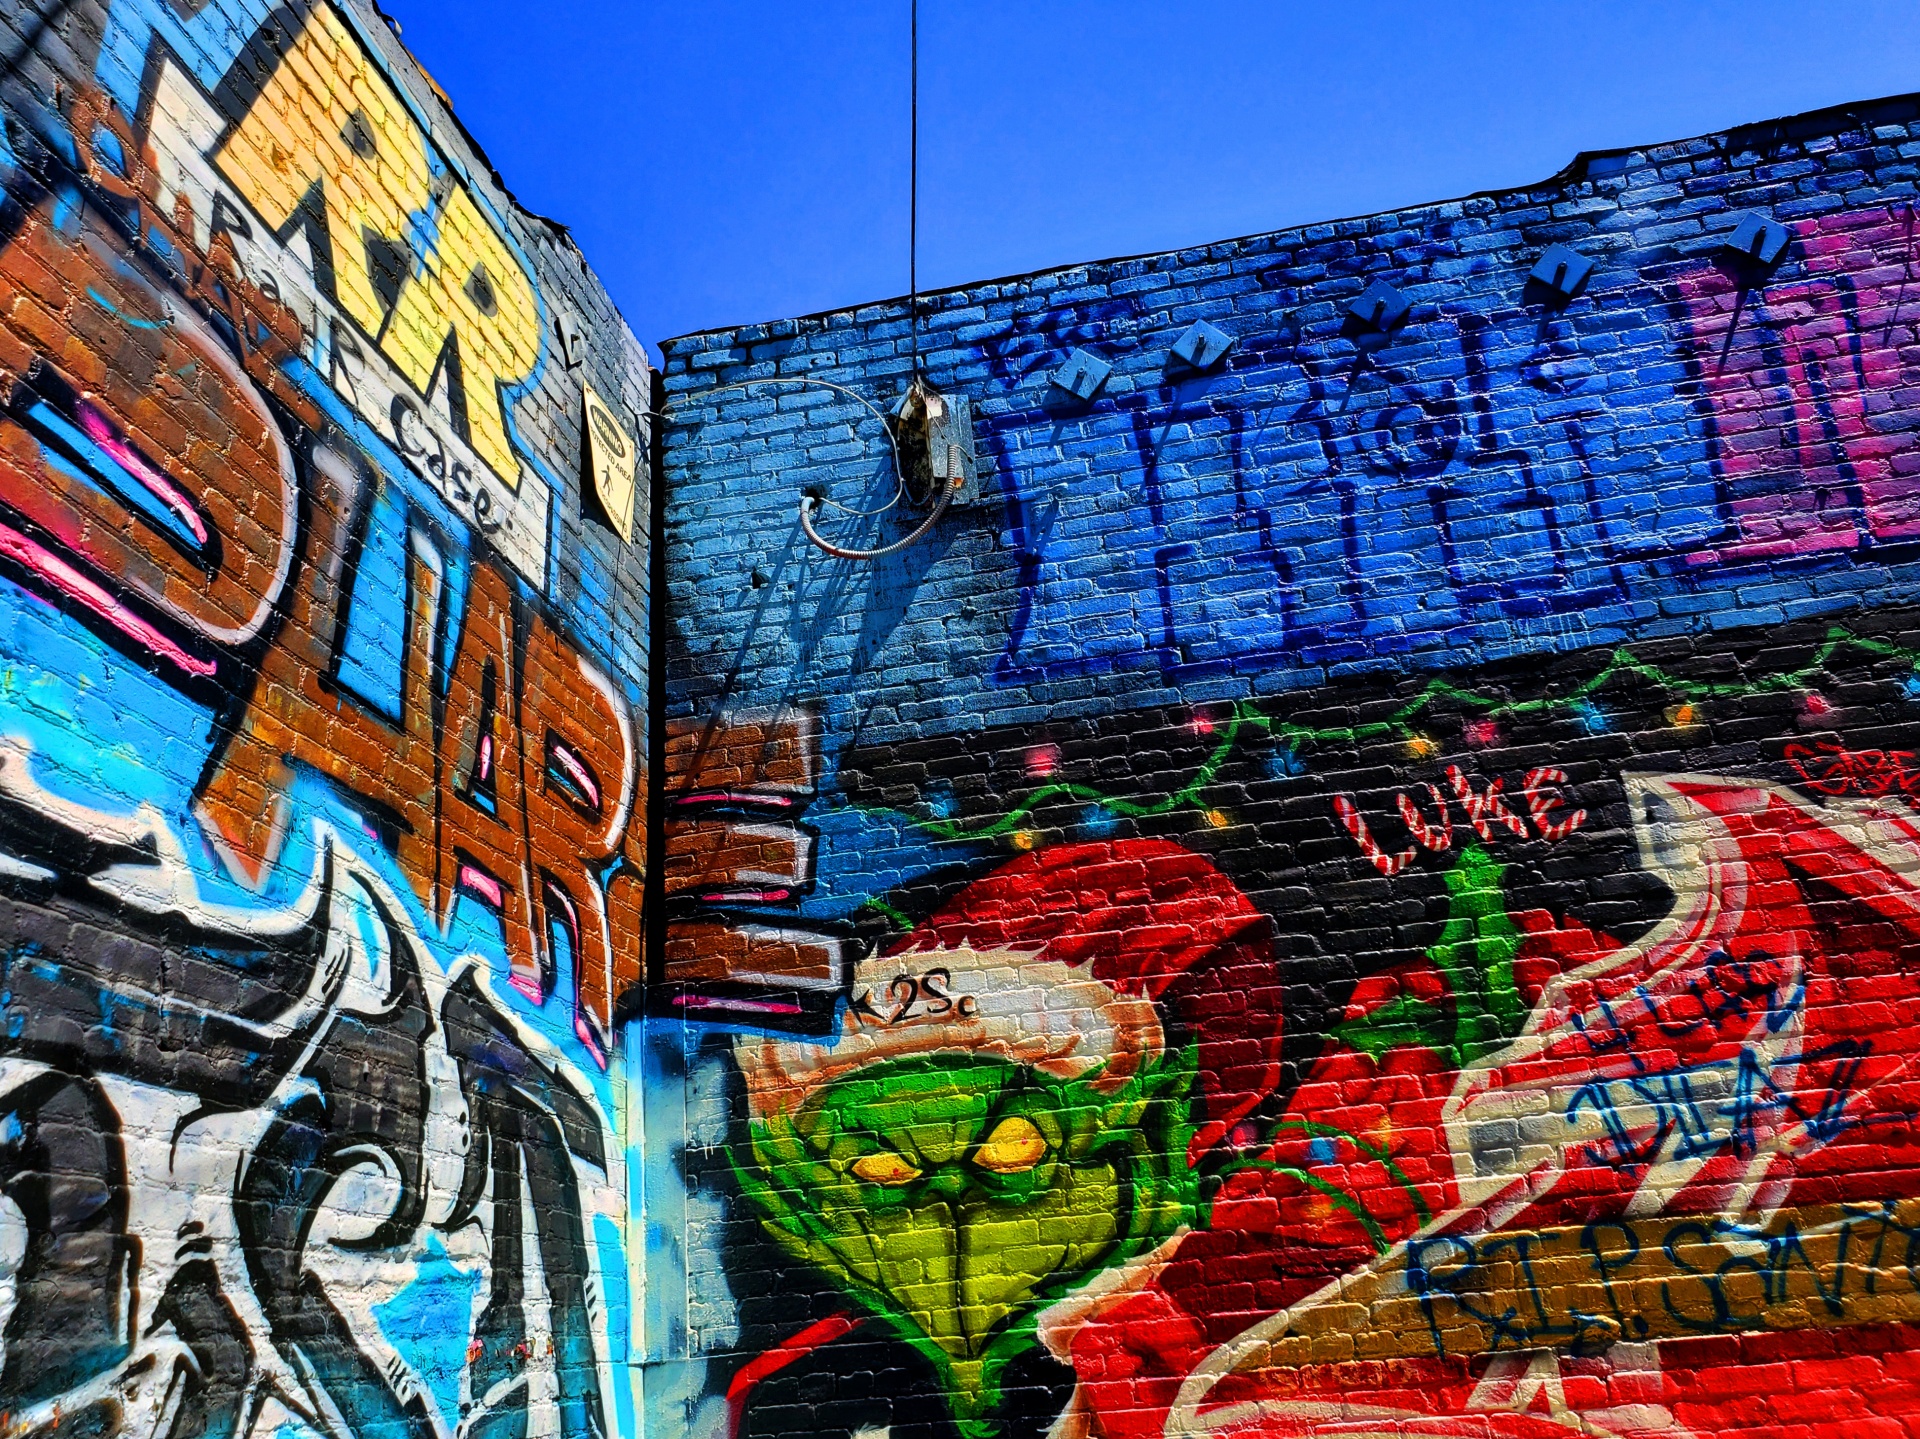 Culver City, Los Angeles, urban art in graffiti on a brick wall